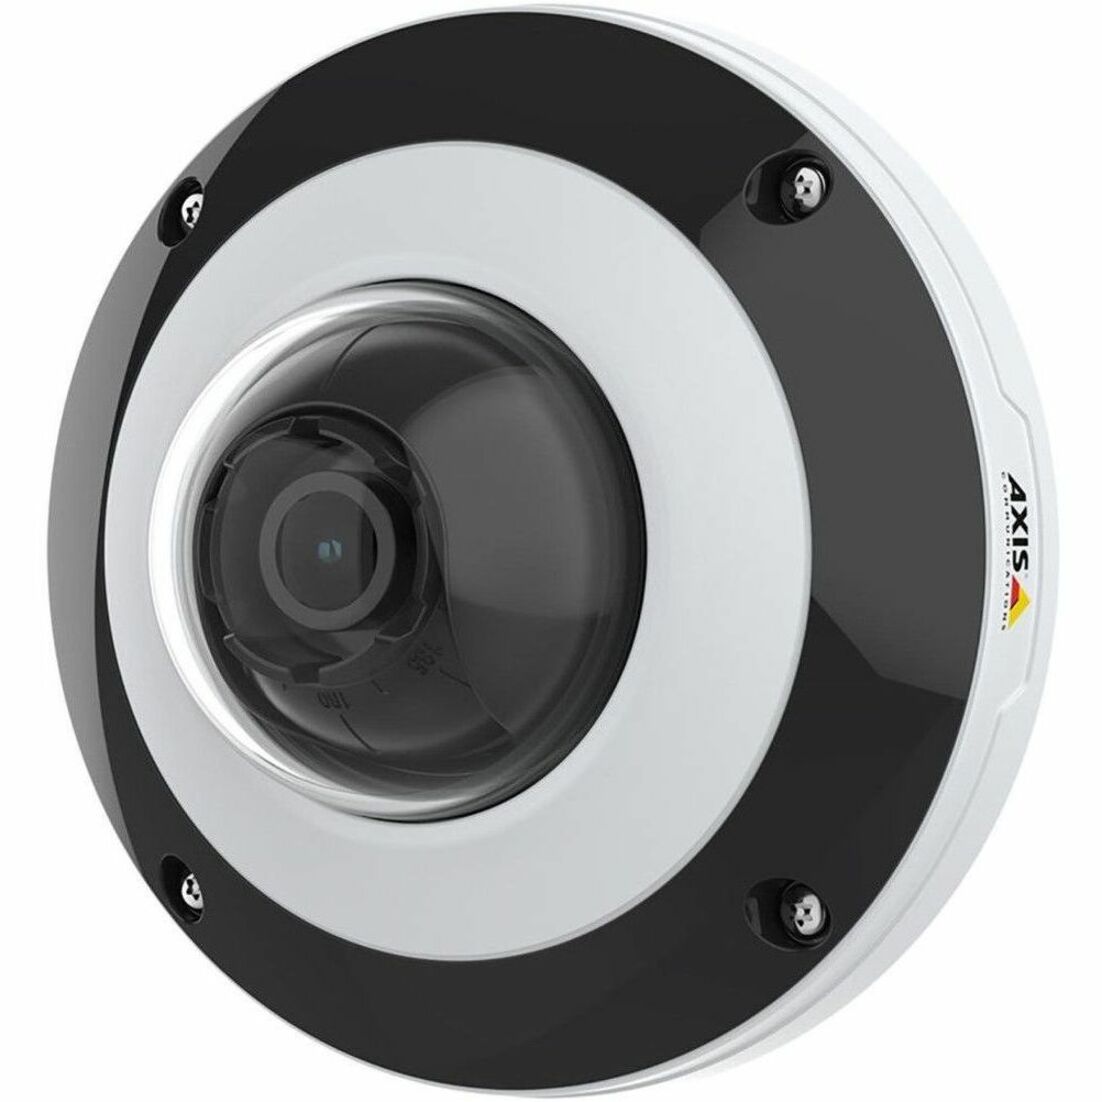 AXIS 02364-001 F4105-LRE Dome Sensor Surveillance Camera Sensor Unit, 5 Year Warranty, Outdoor Use